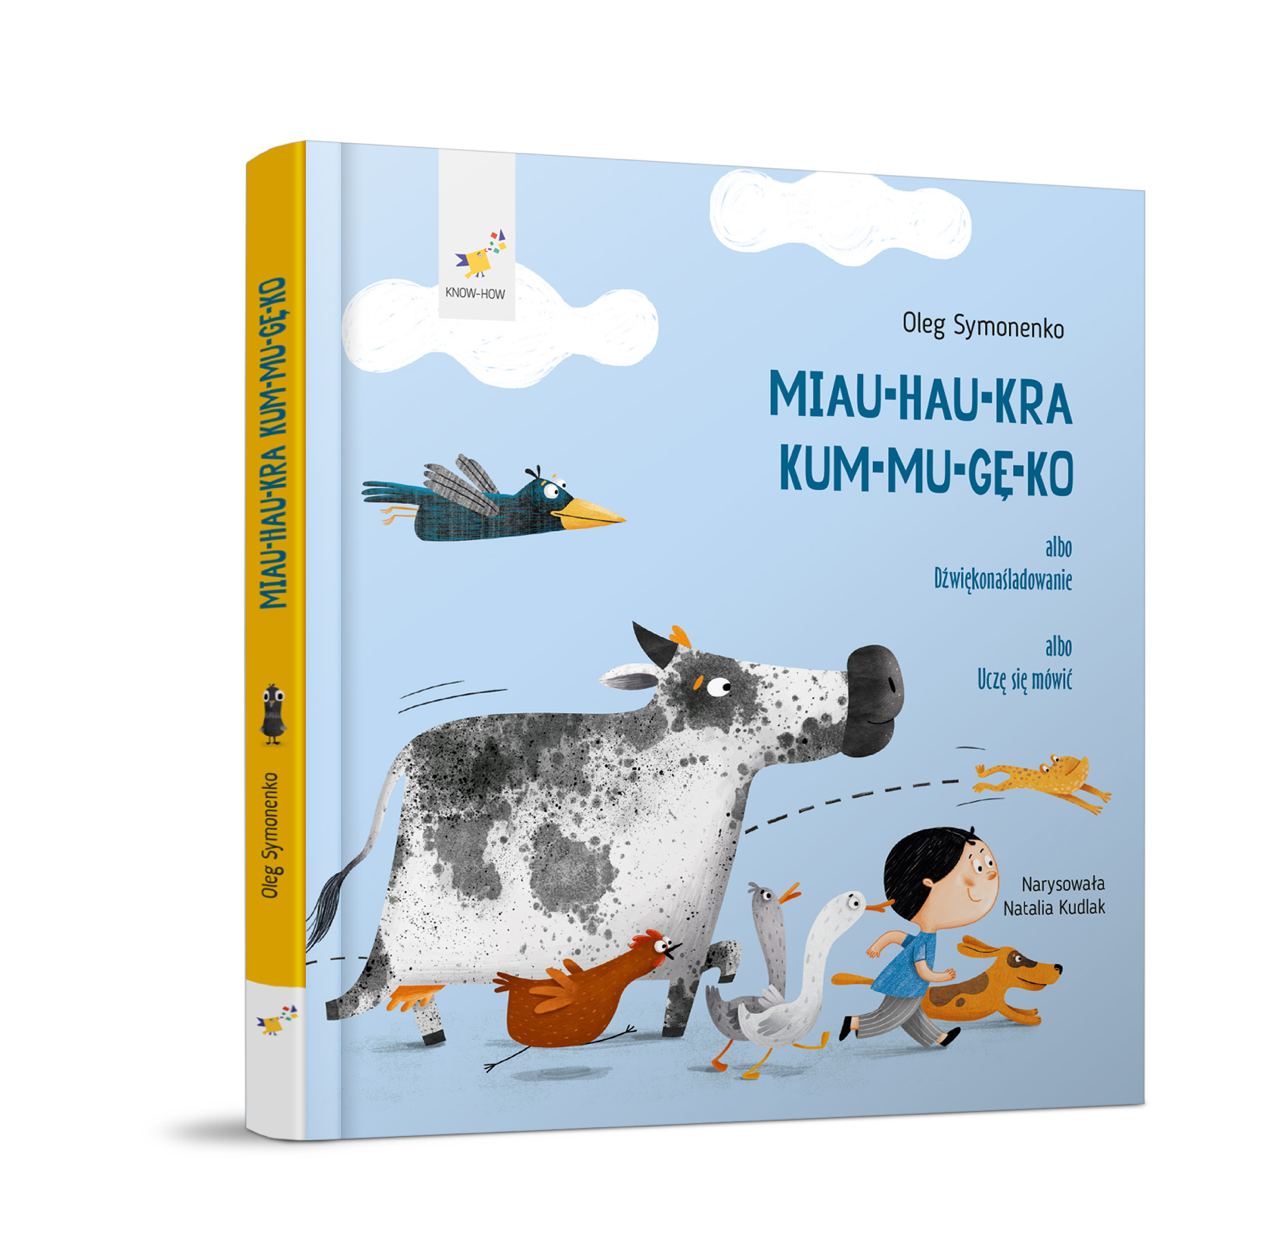 Knjiga Miau-hau /wersja polska/ 